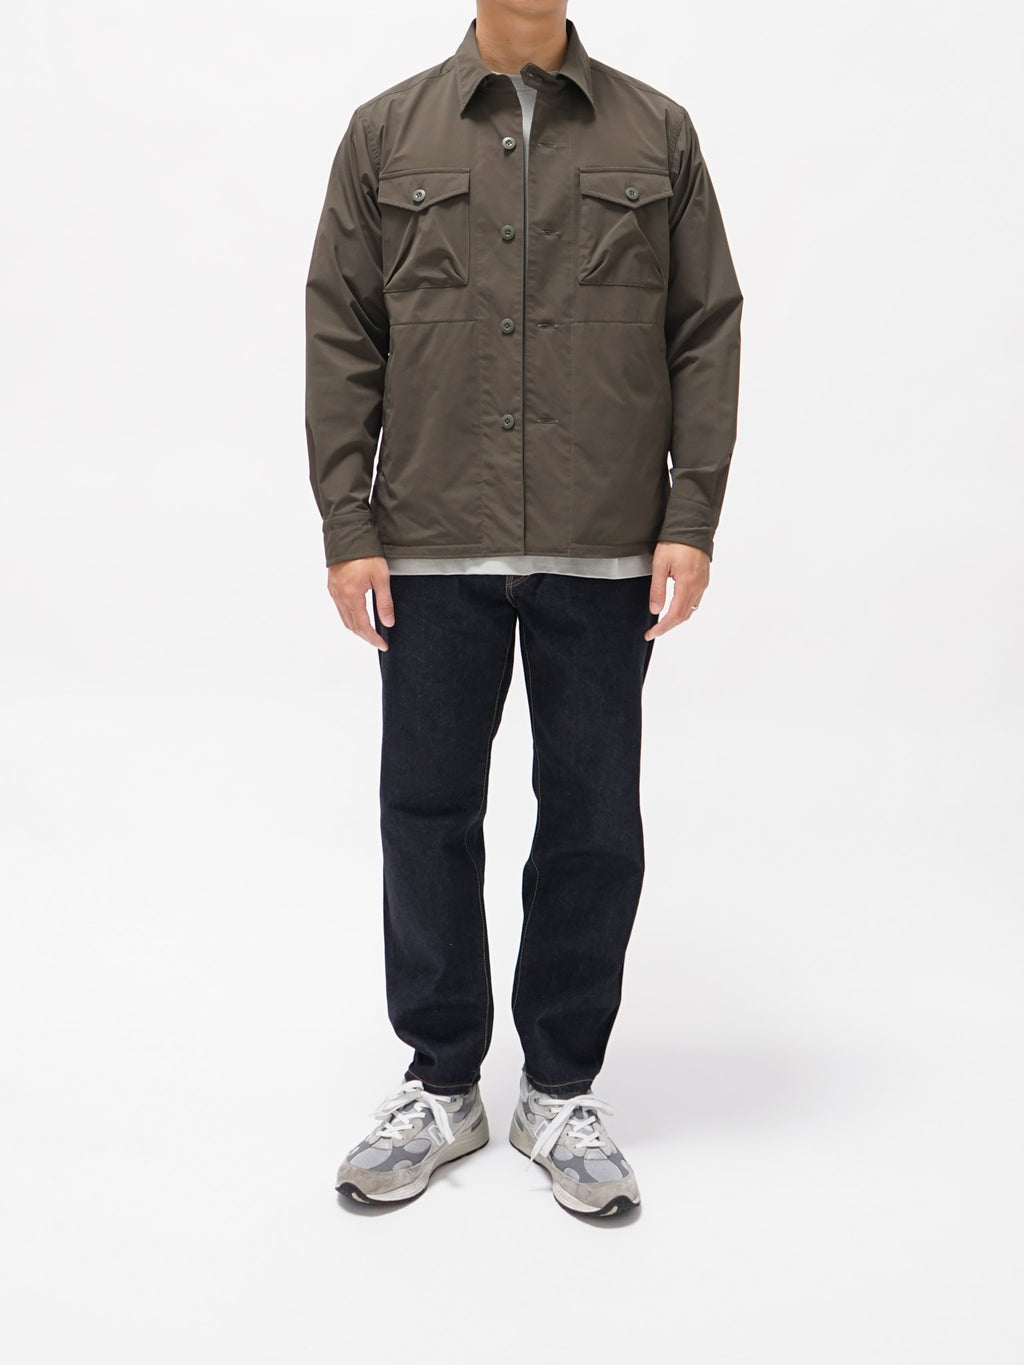 Namu Shop - ts(s) SOLOTEX Polyester Stretch CPO Shirt Jacket - Olive